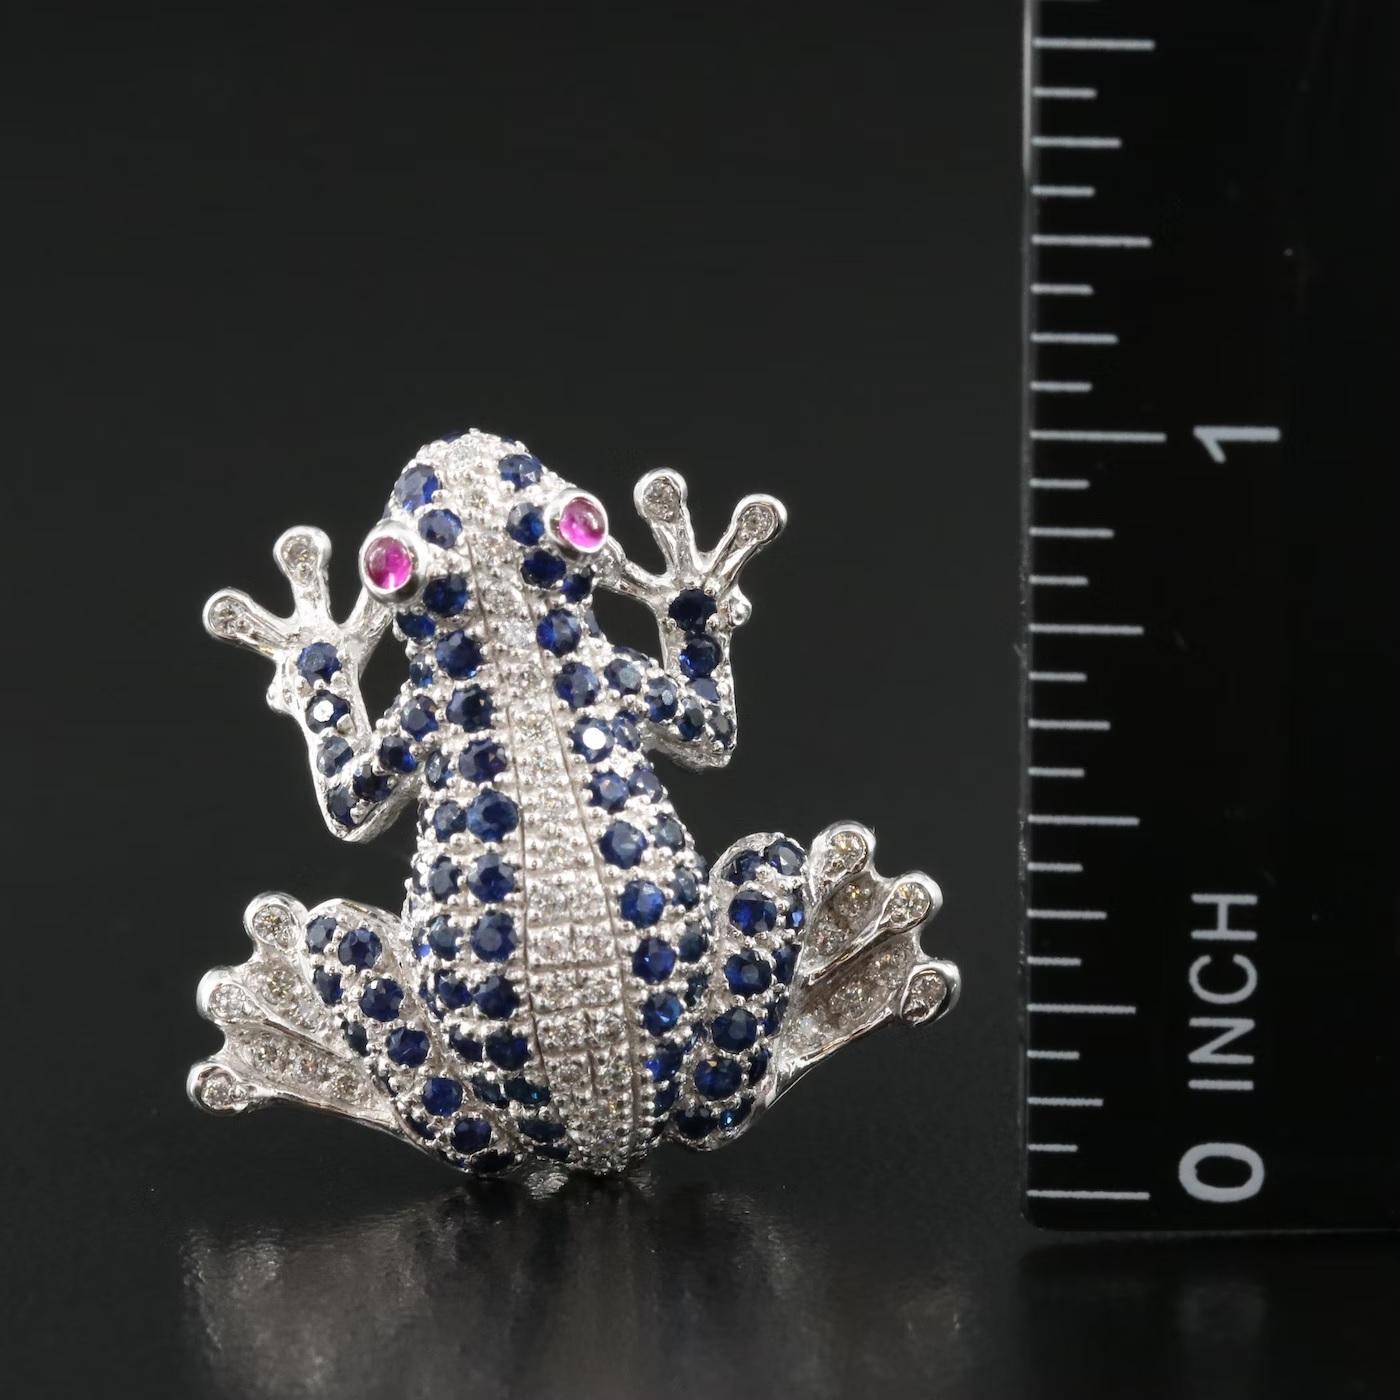 Round Cut $4950 / New / Levian 3D Frog Pendant Brooch / Diamond, Sapphire & Ruby